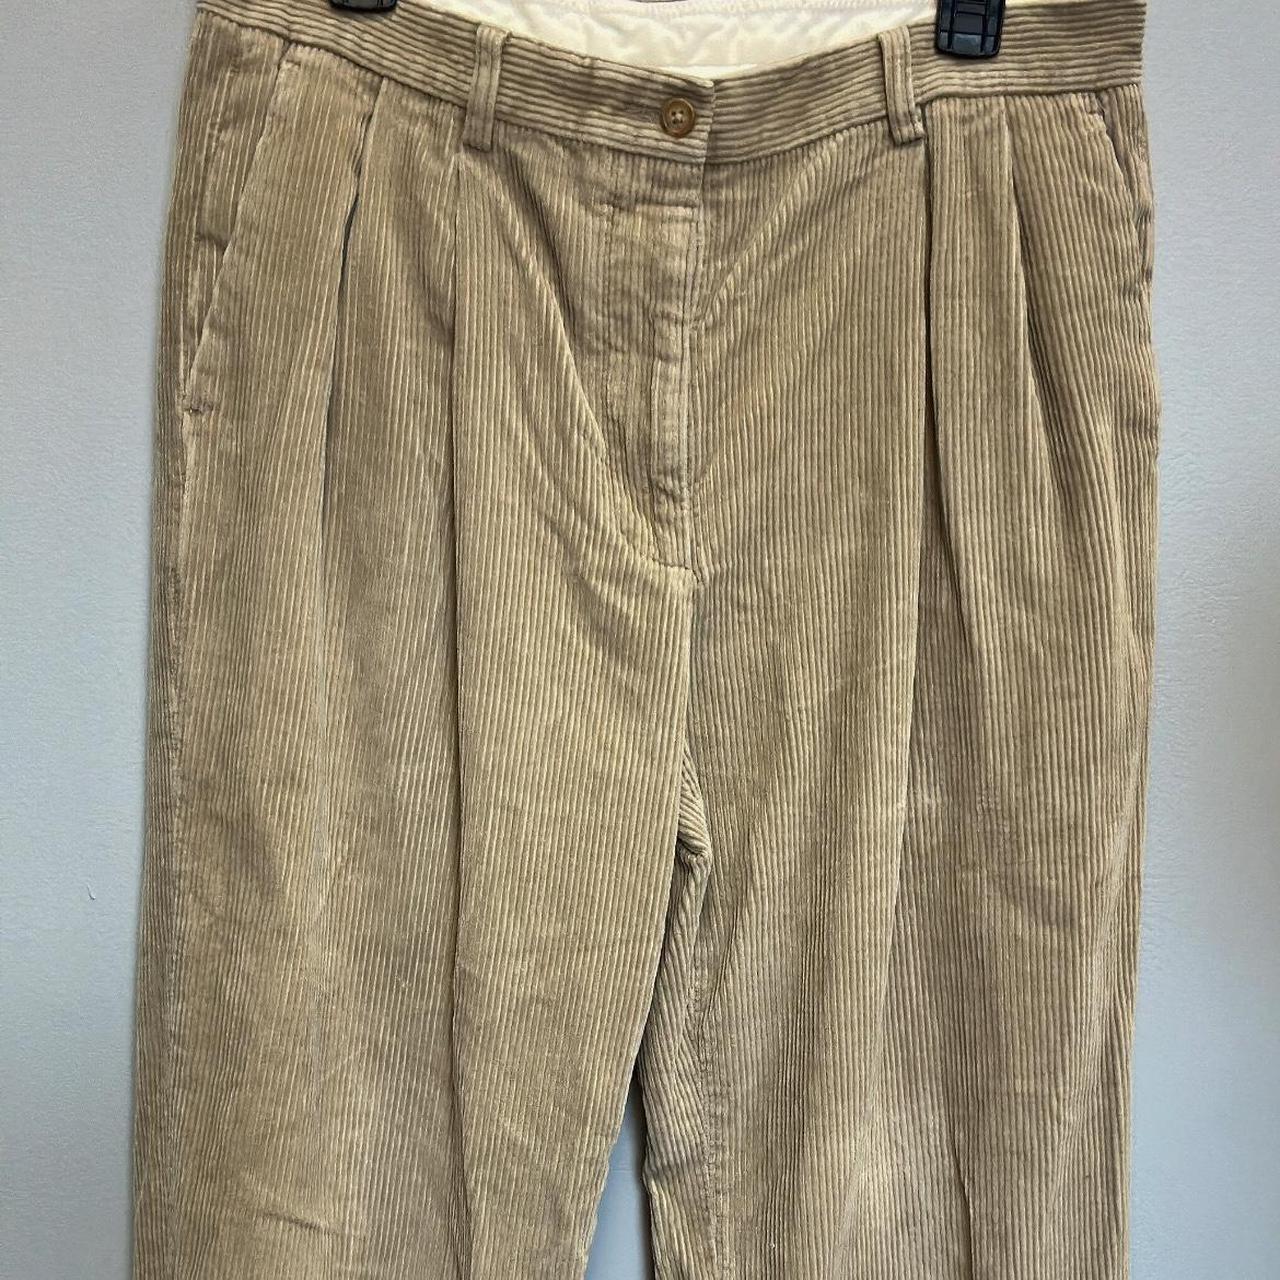 Nautica Men's Tan Trousers (2)